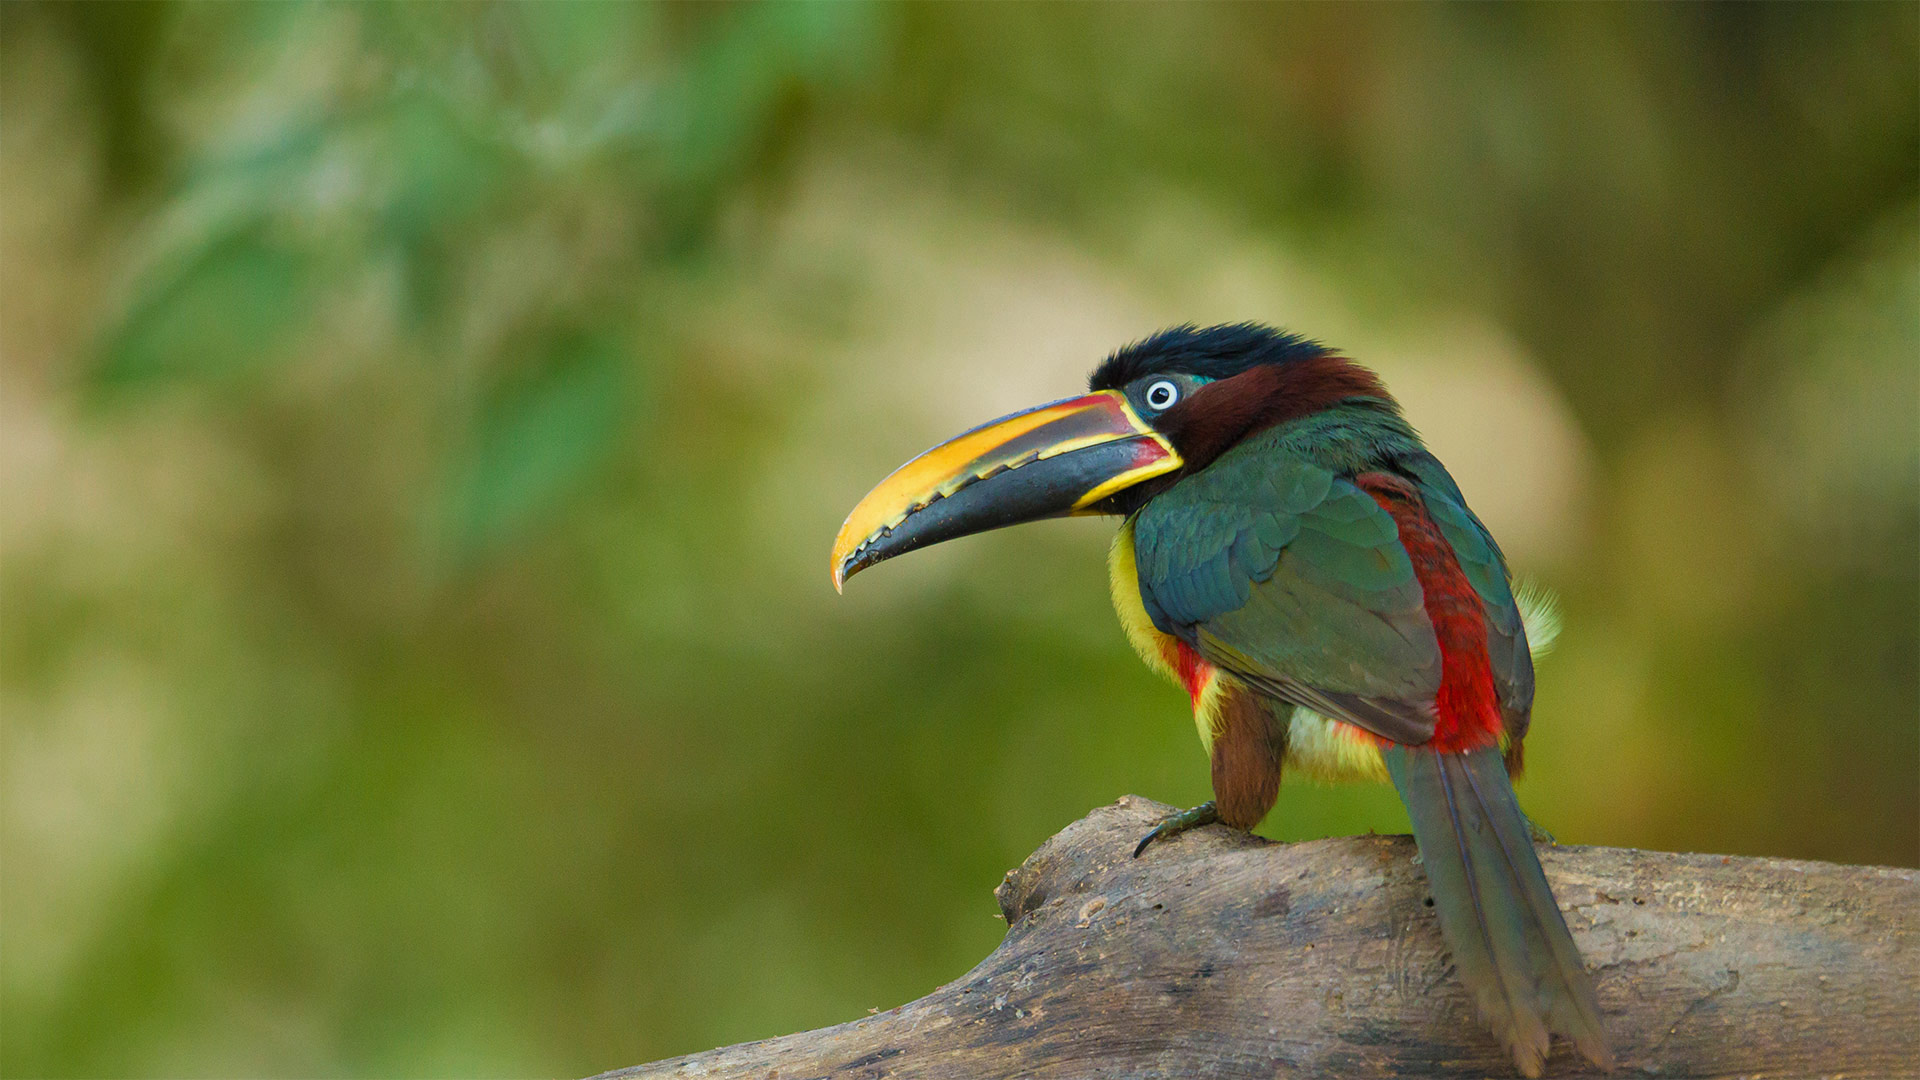 Chestnut-eared aracari in the Pantanal region of Brazil - Ana Gram/Shutterstock)